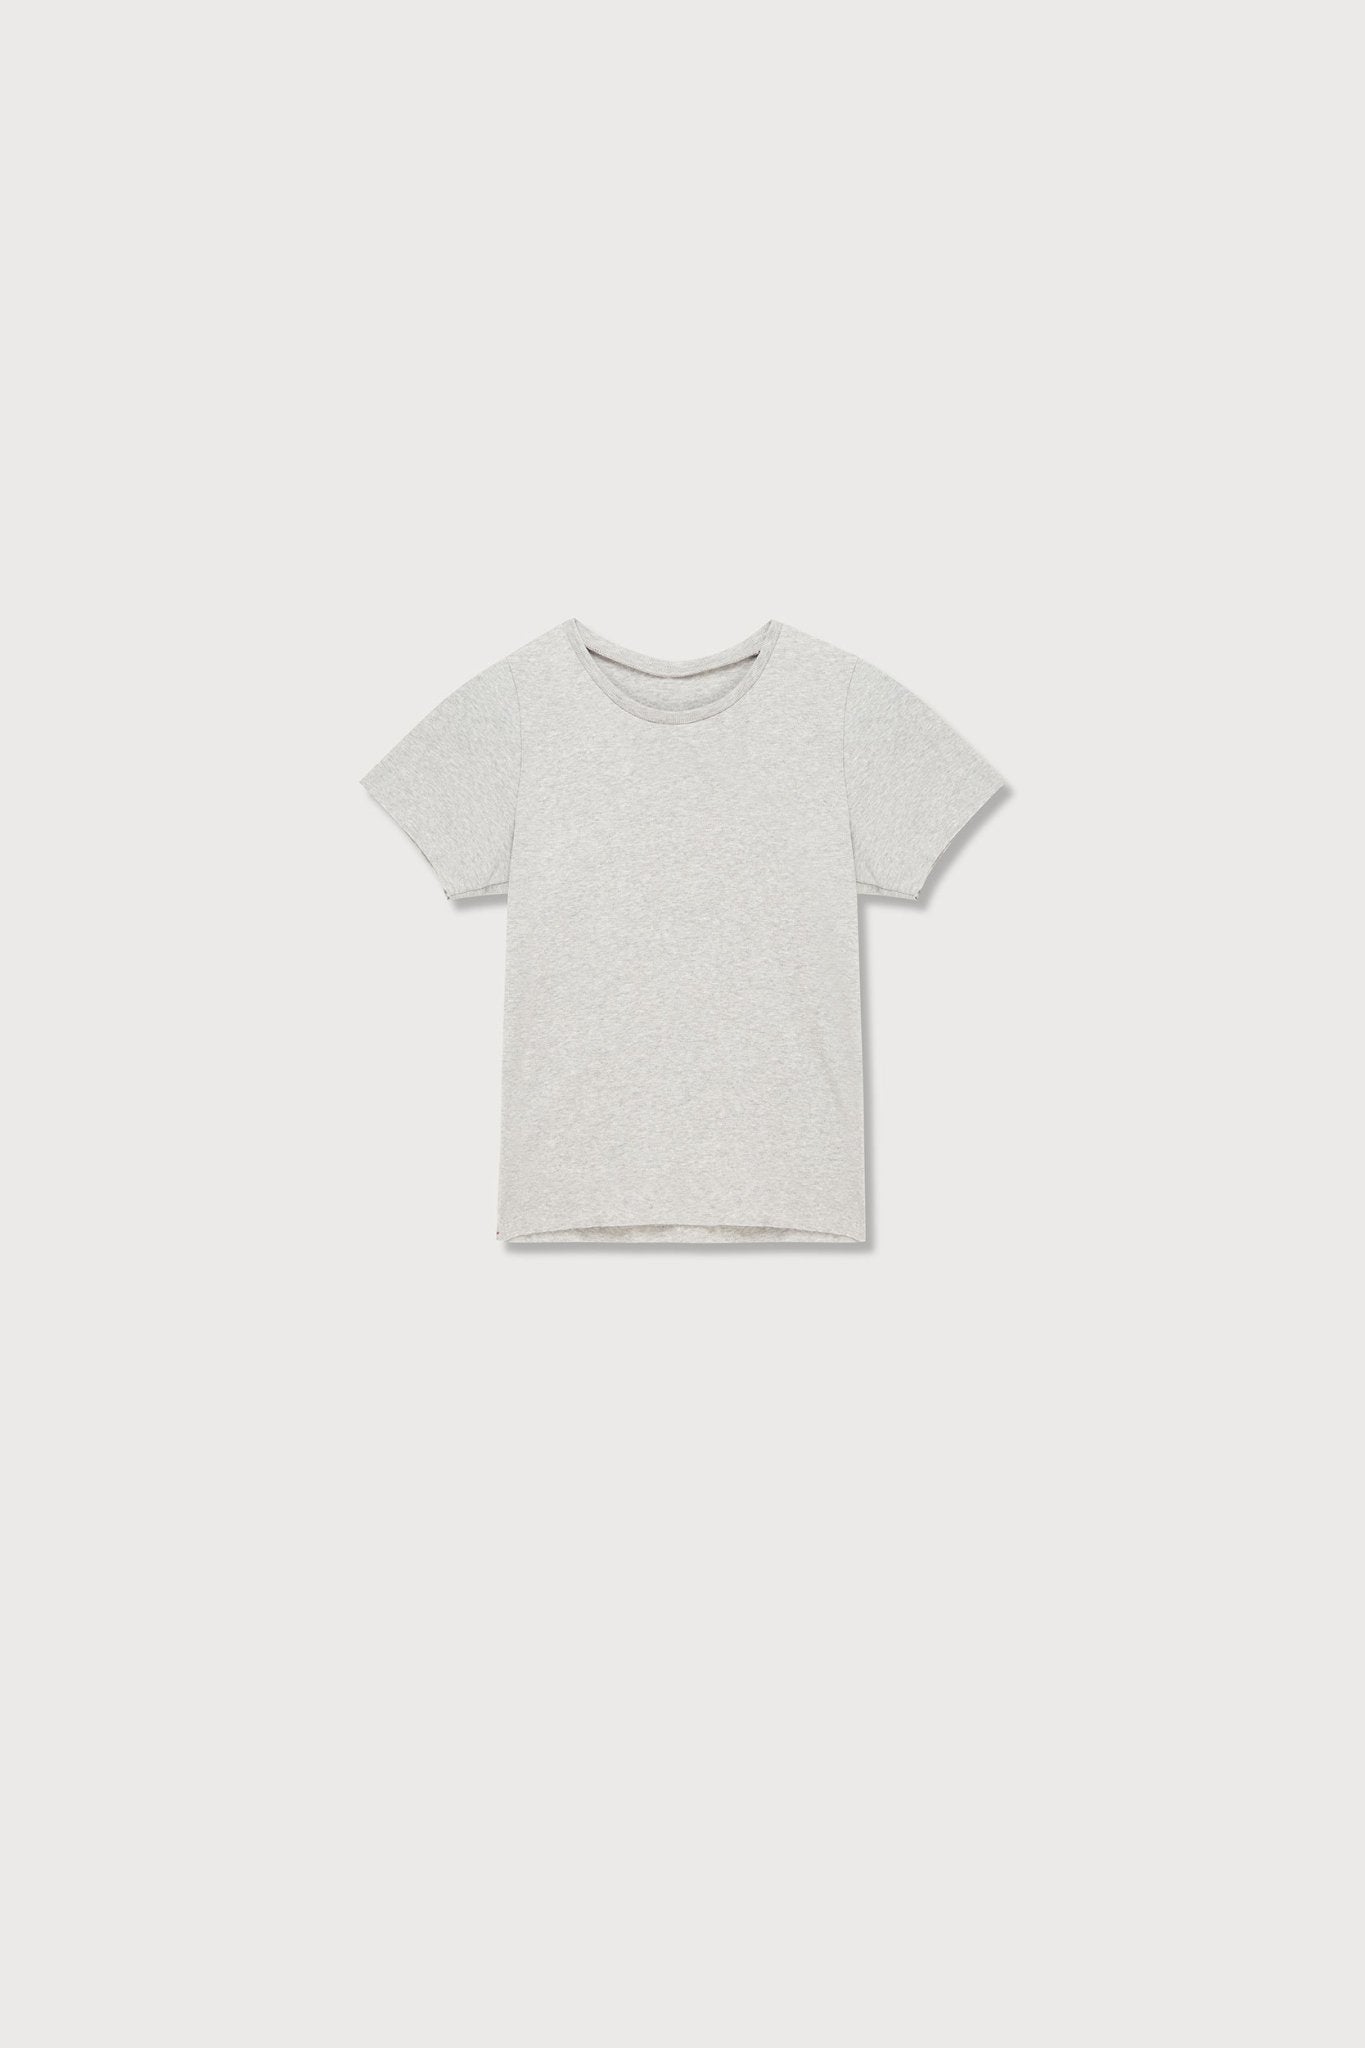 A.BCH A.35 Grey Marle Rib T-Shirt in Organic Cotton